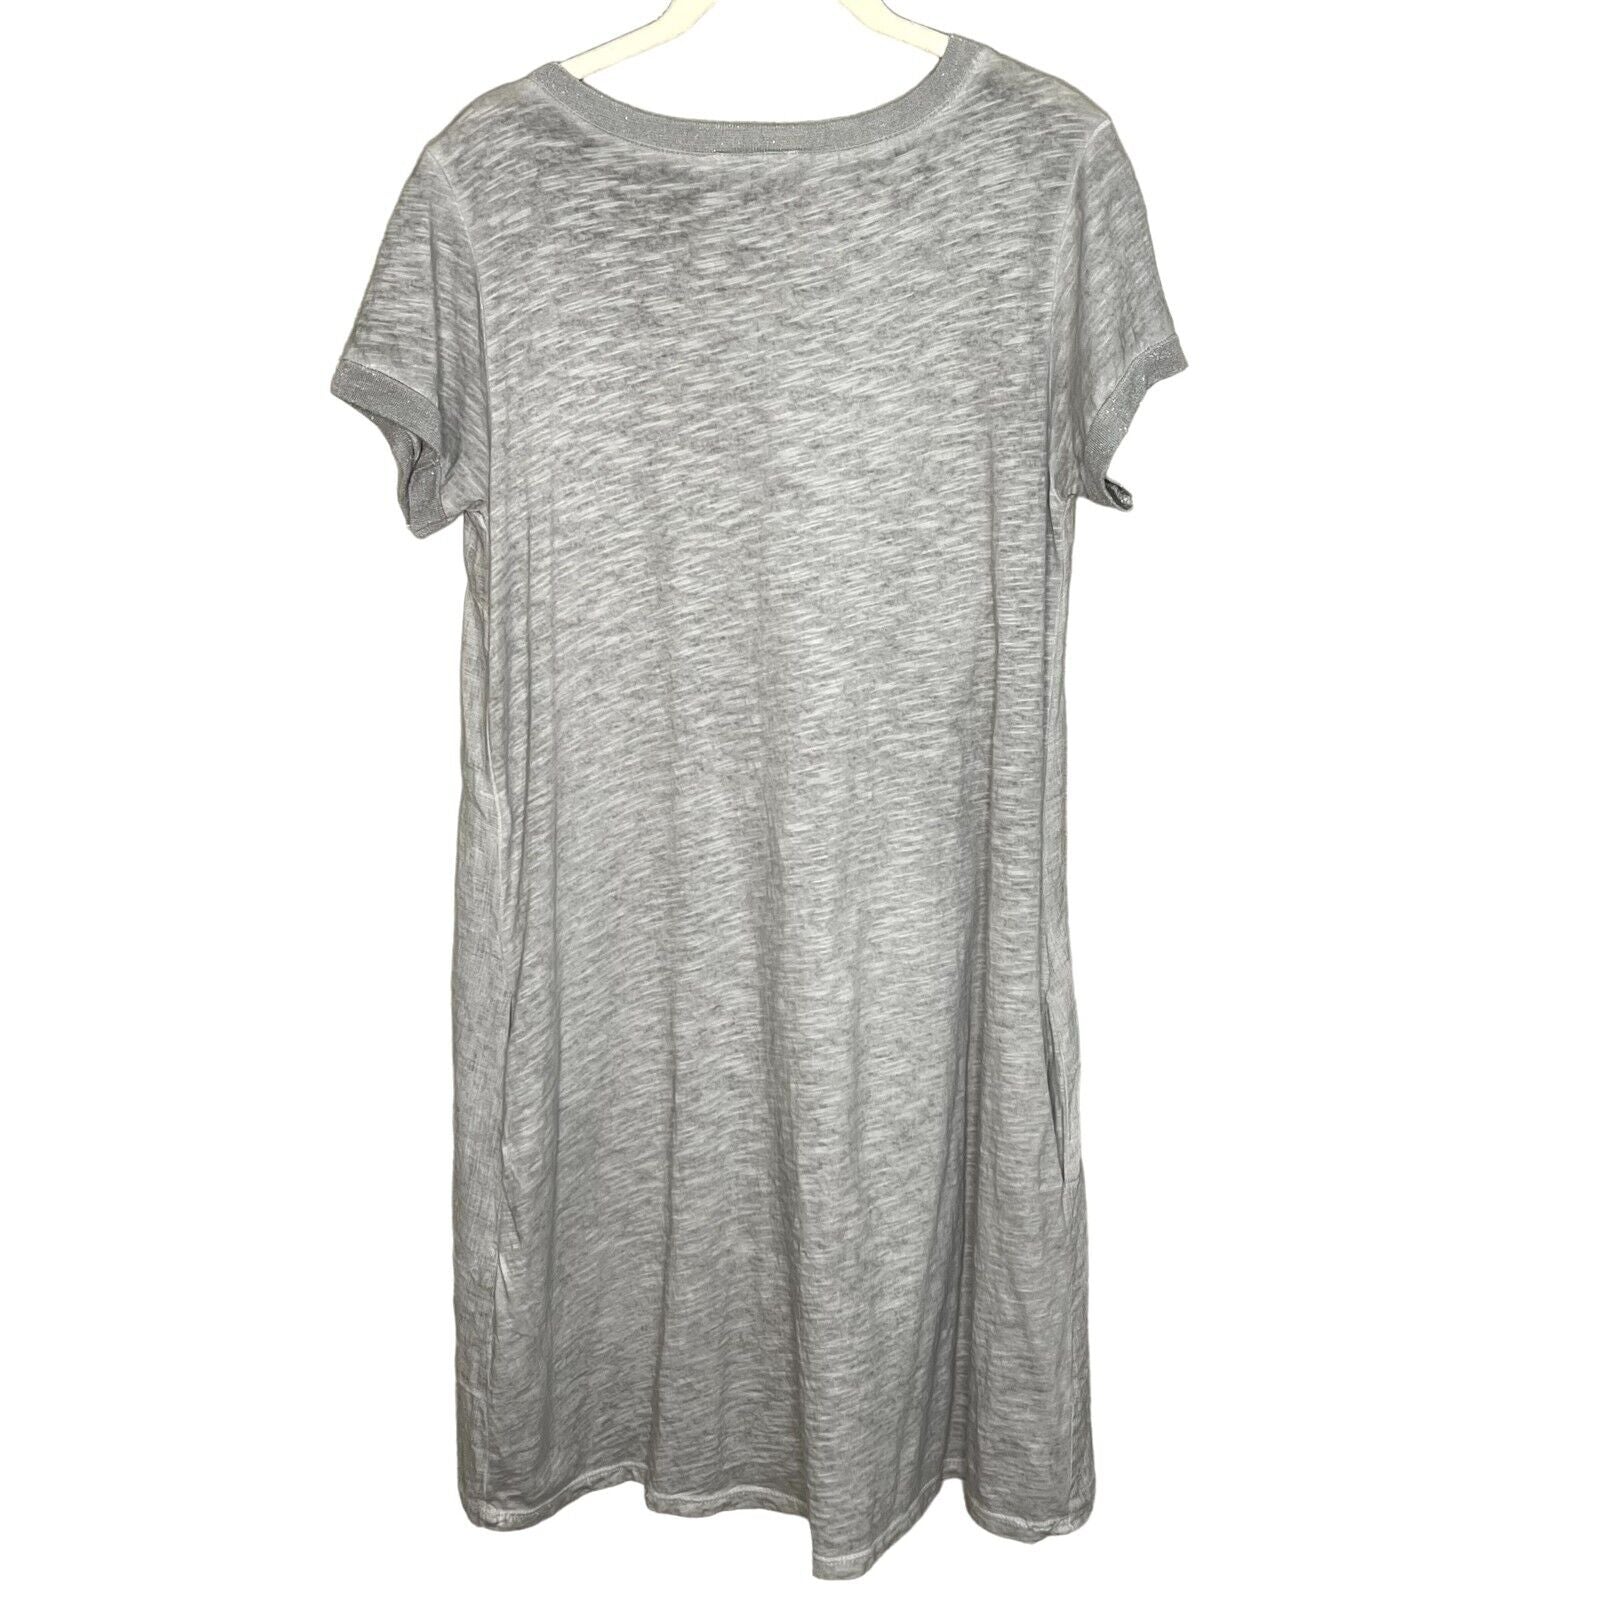 Angela Mara Grey Silver Metallic 100% Linen Tee Shift Dress Size Small / Medium